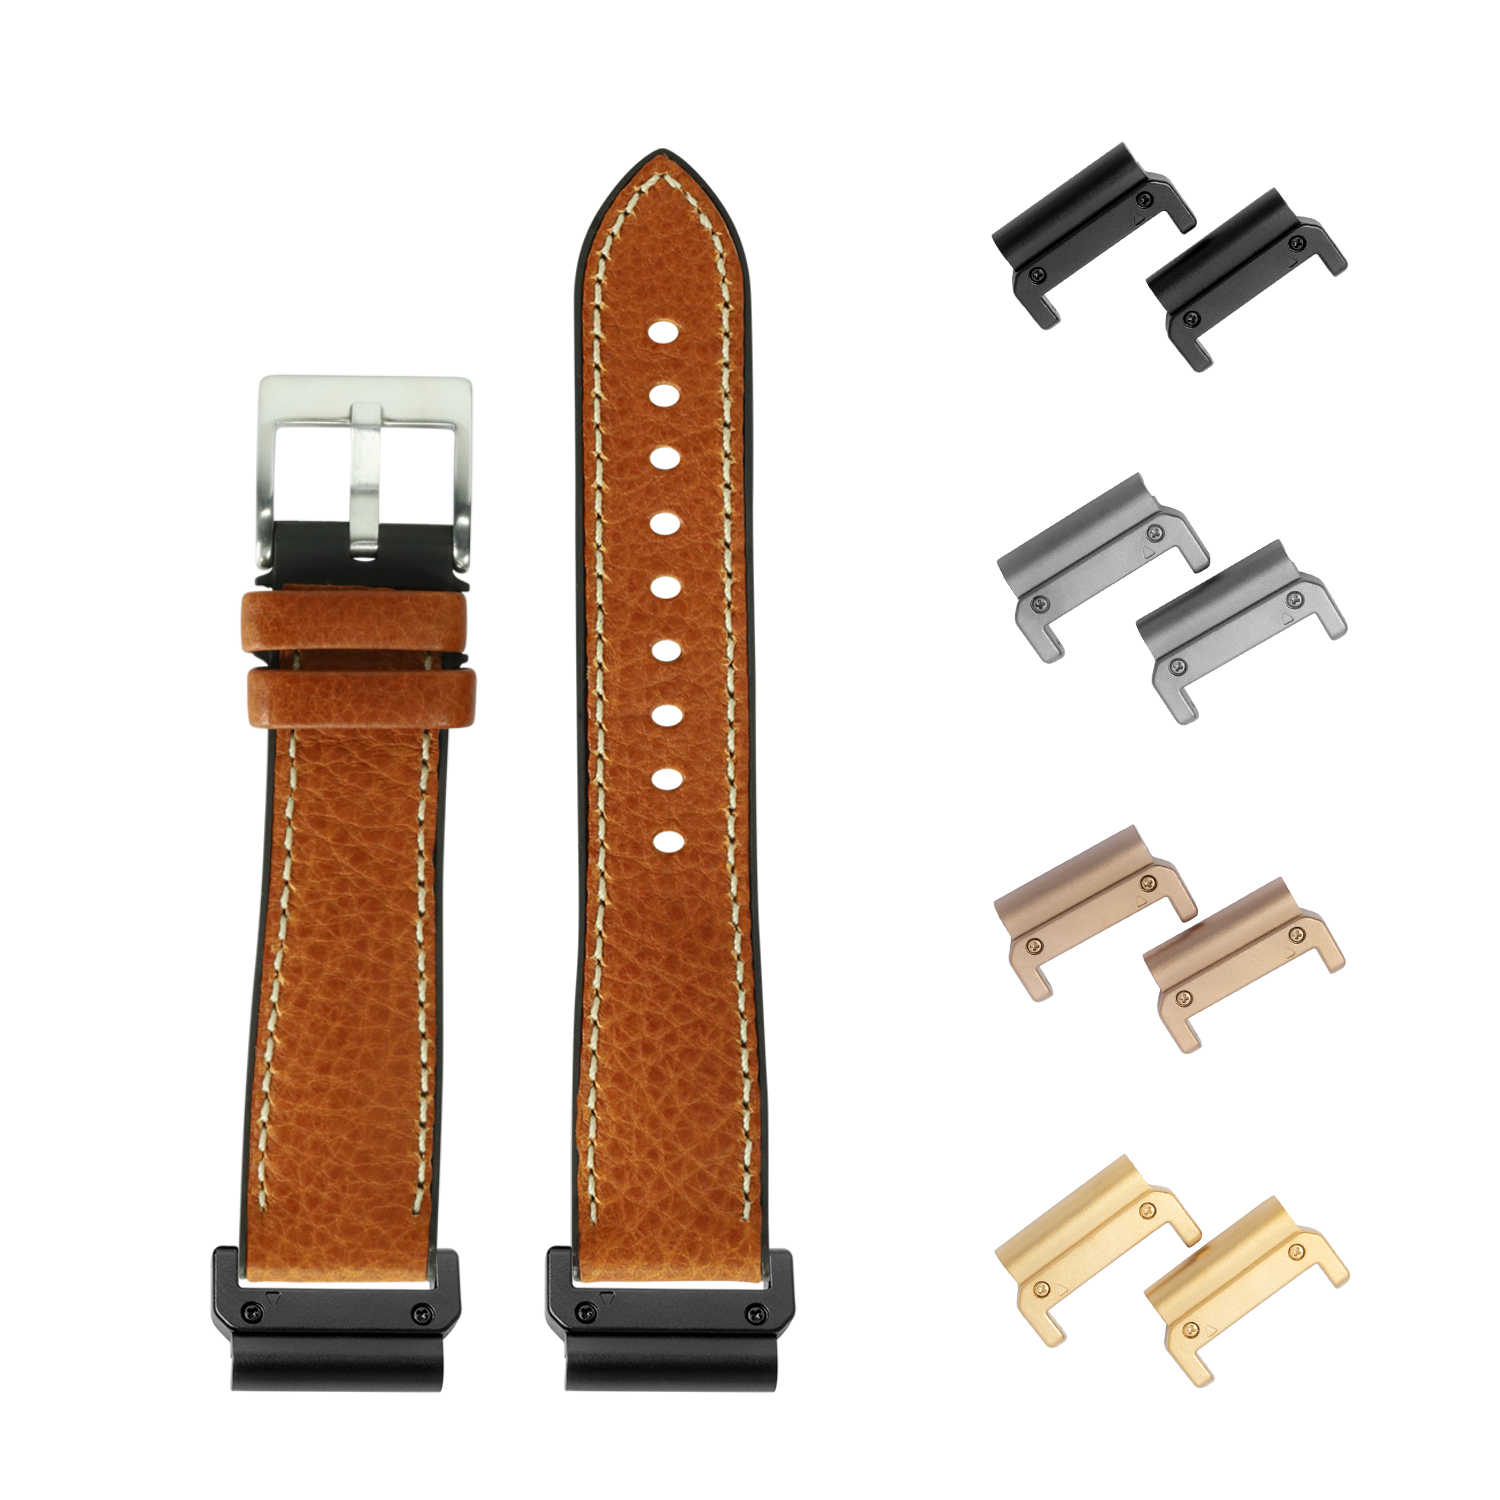 [QuickFit] Italian Leather & FKM Rubber Hybrid 22mm